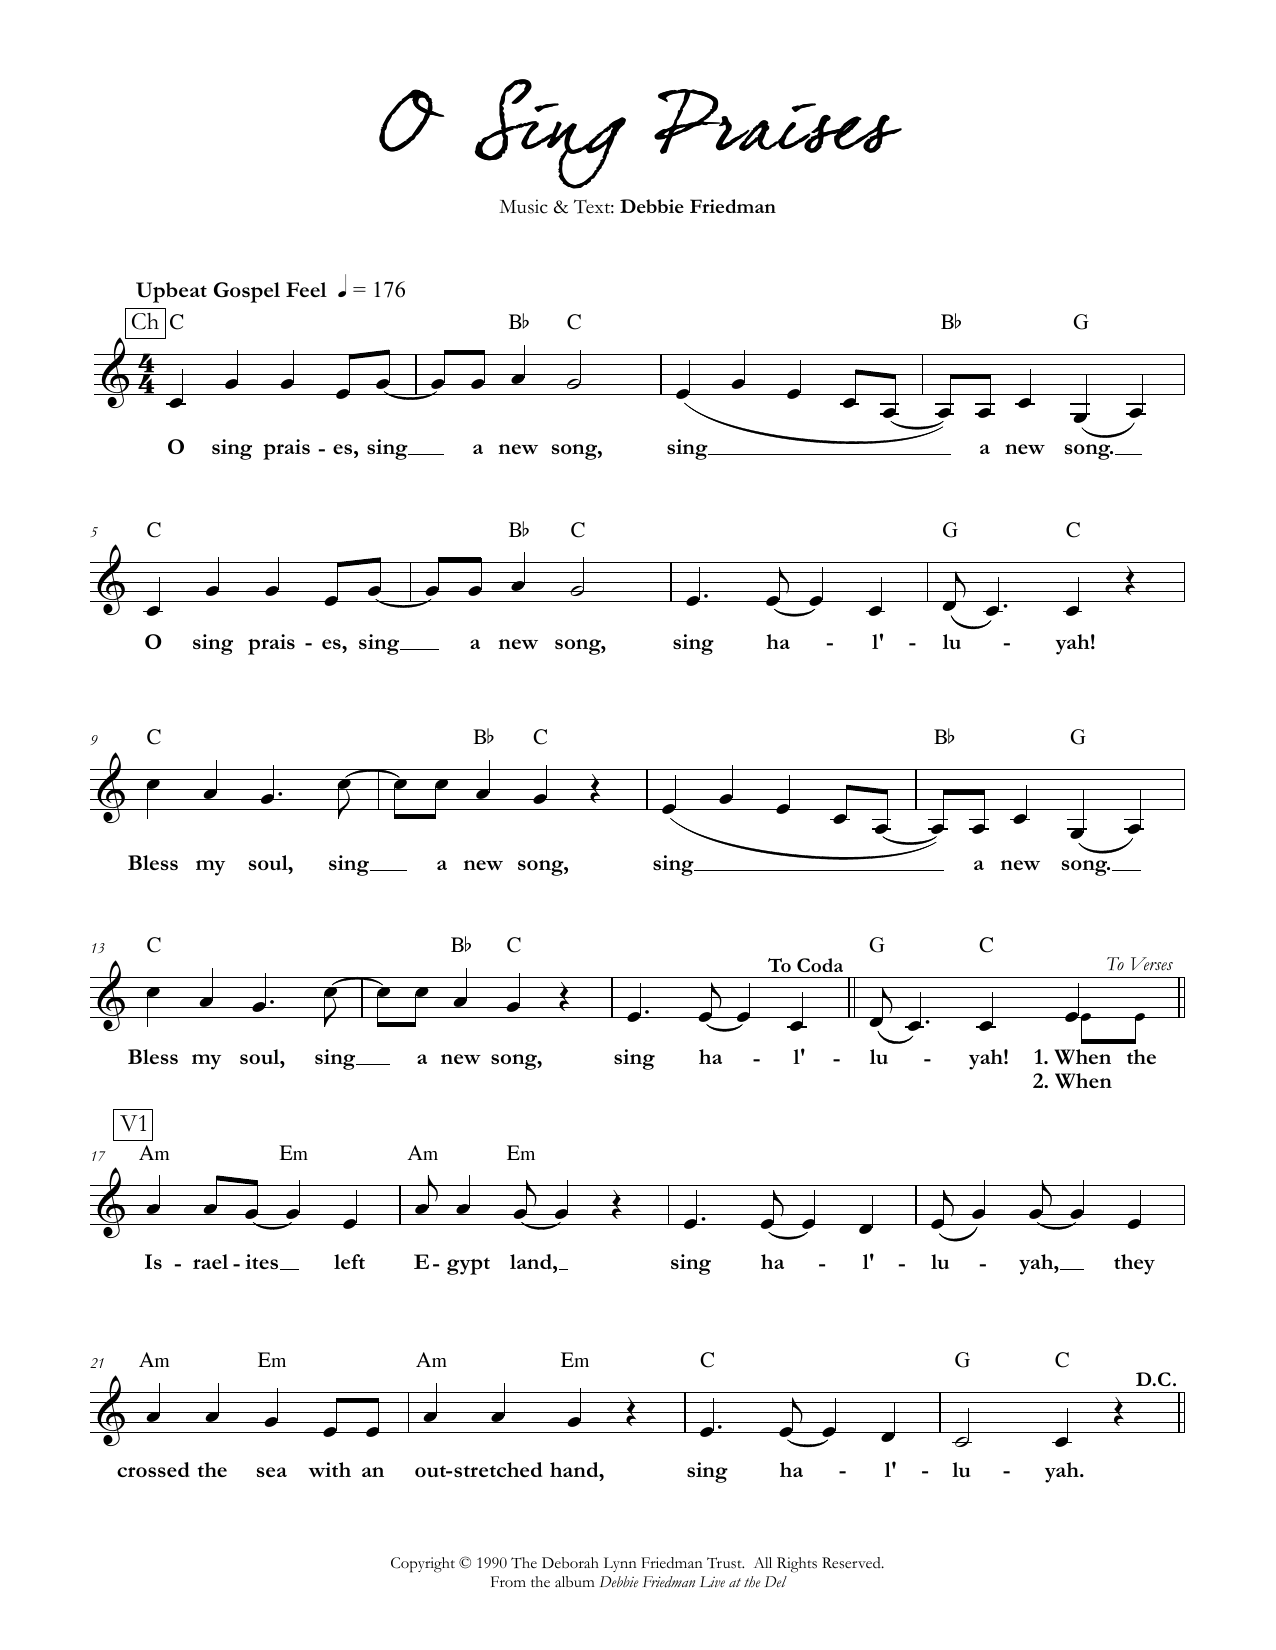 Debbie Friedman O Sing Praises Sheet Music Notes & Chords for Lead Sheet / Fake Book - Download or Print PDF